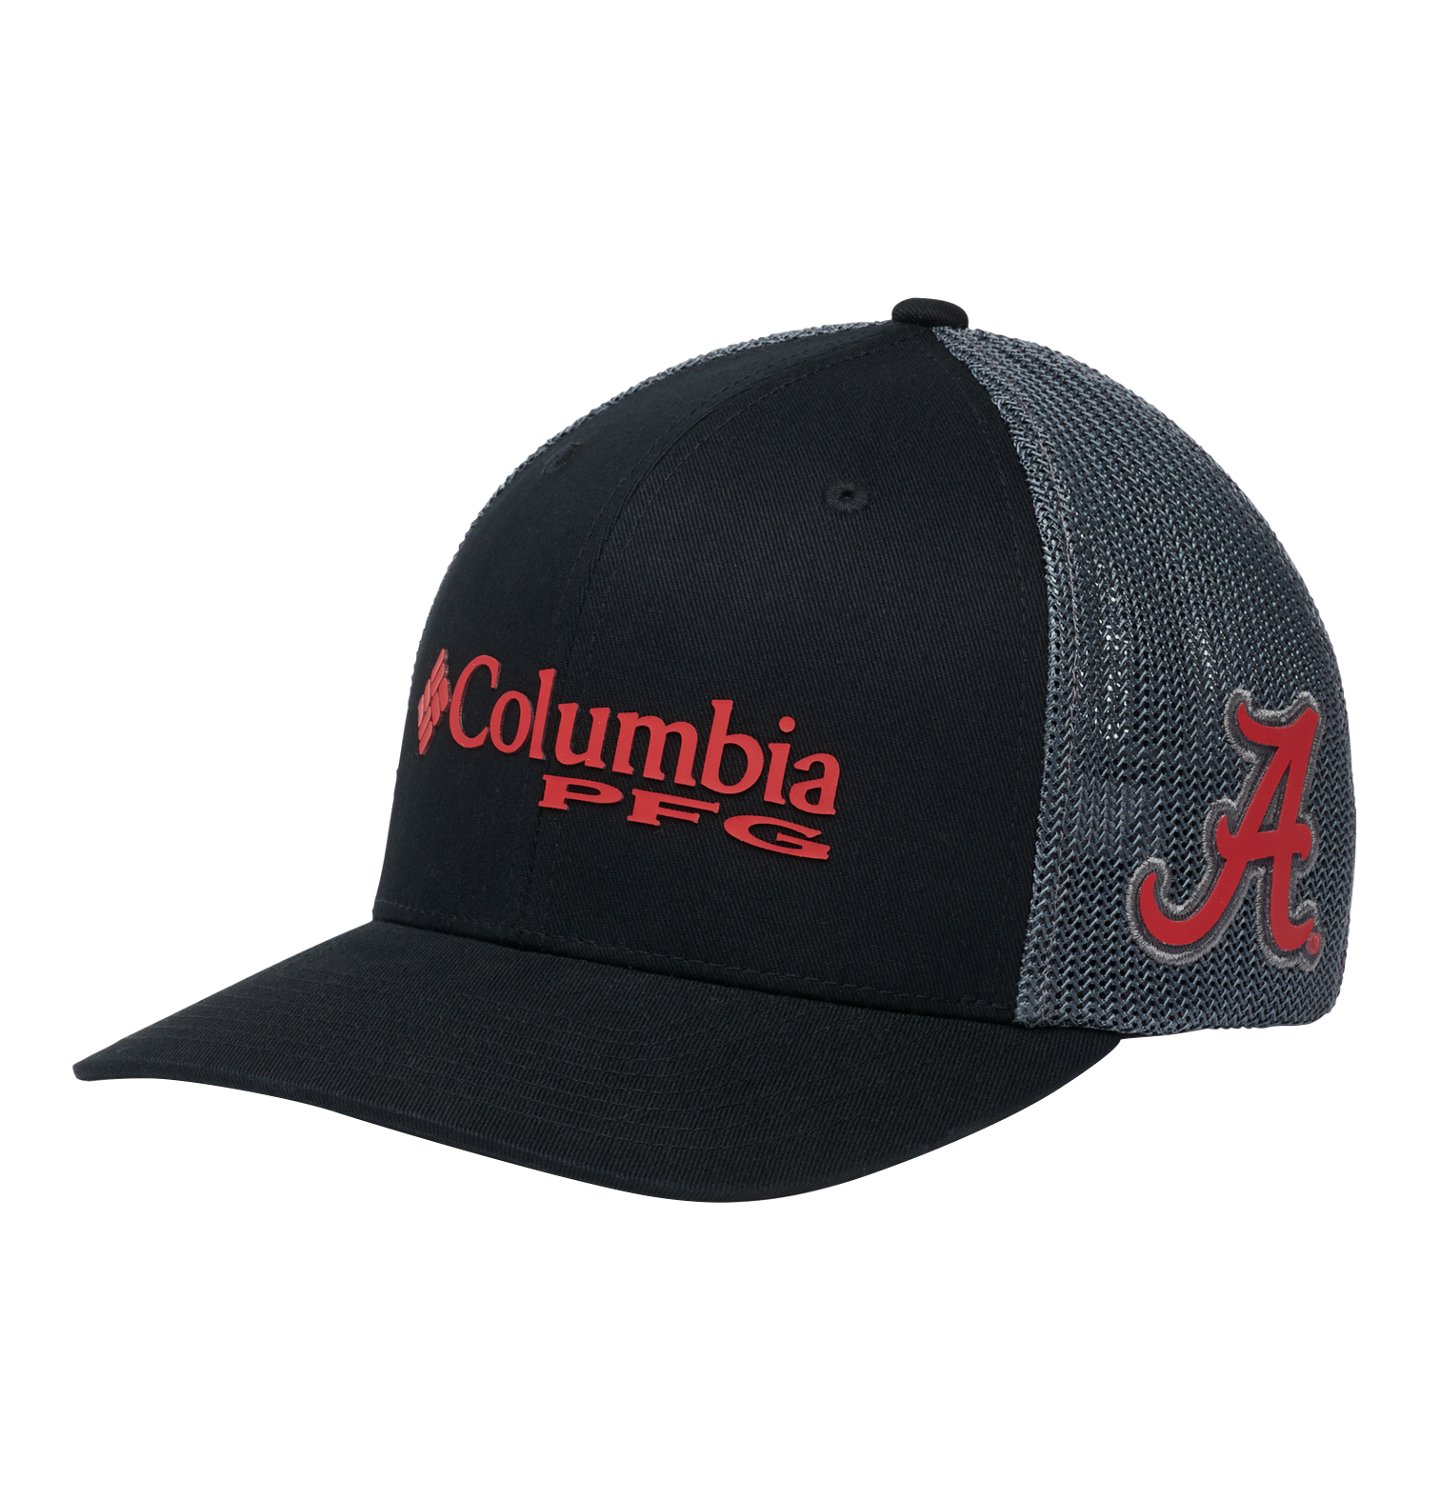 Academy Sports + Outdoors Columbia Sportswear Men's University of Alabama  Collegiate PFG Mesh Ball Cap